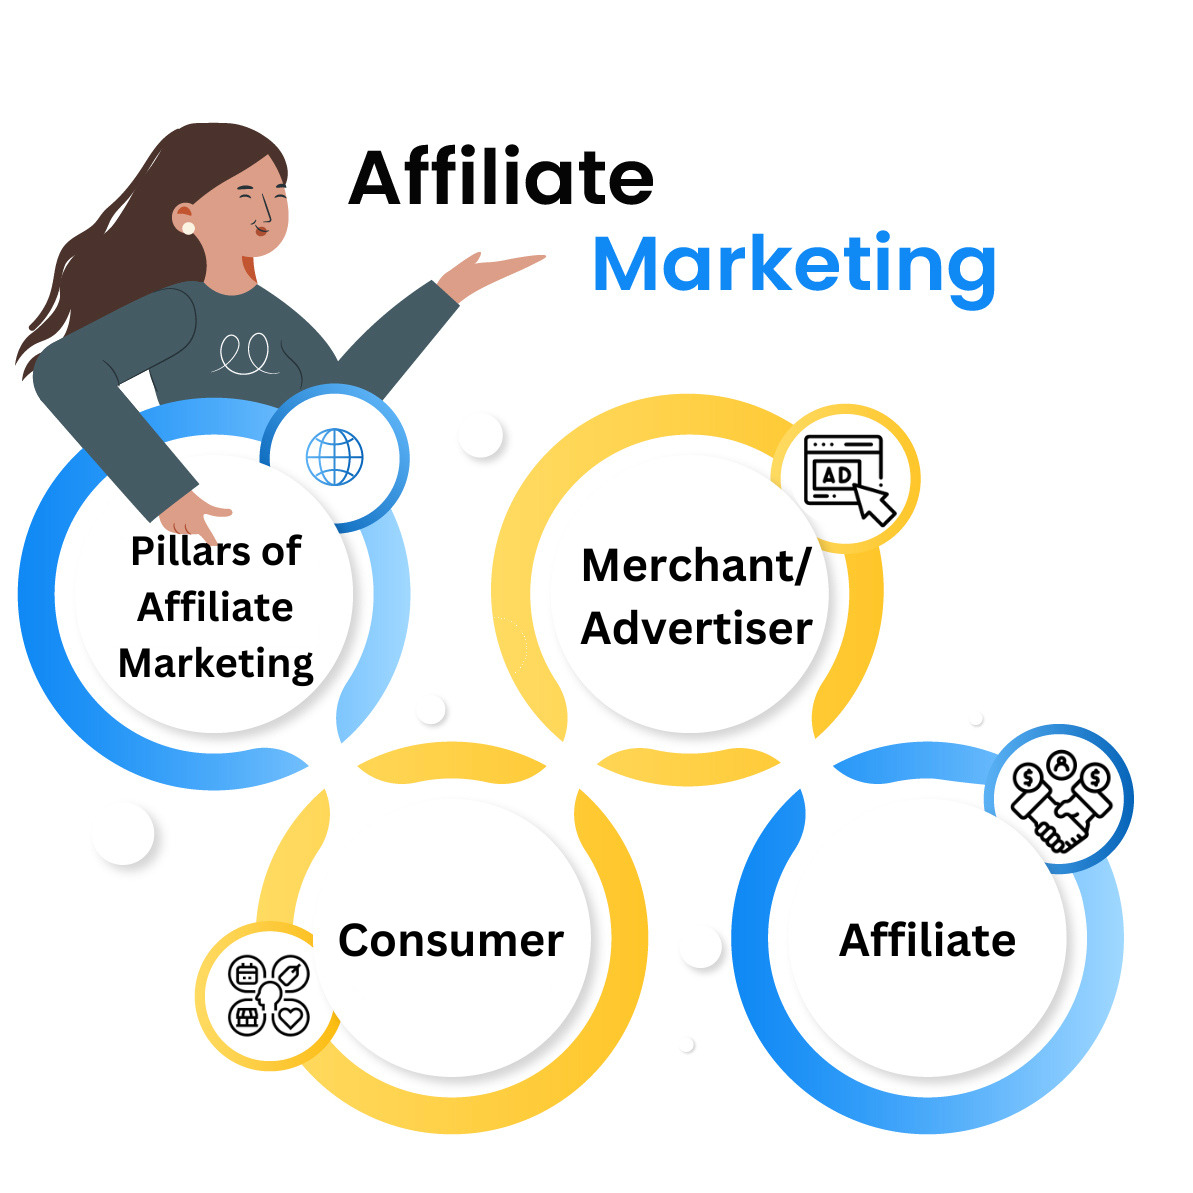 3 pillars of affiliate marketing